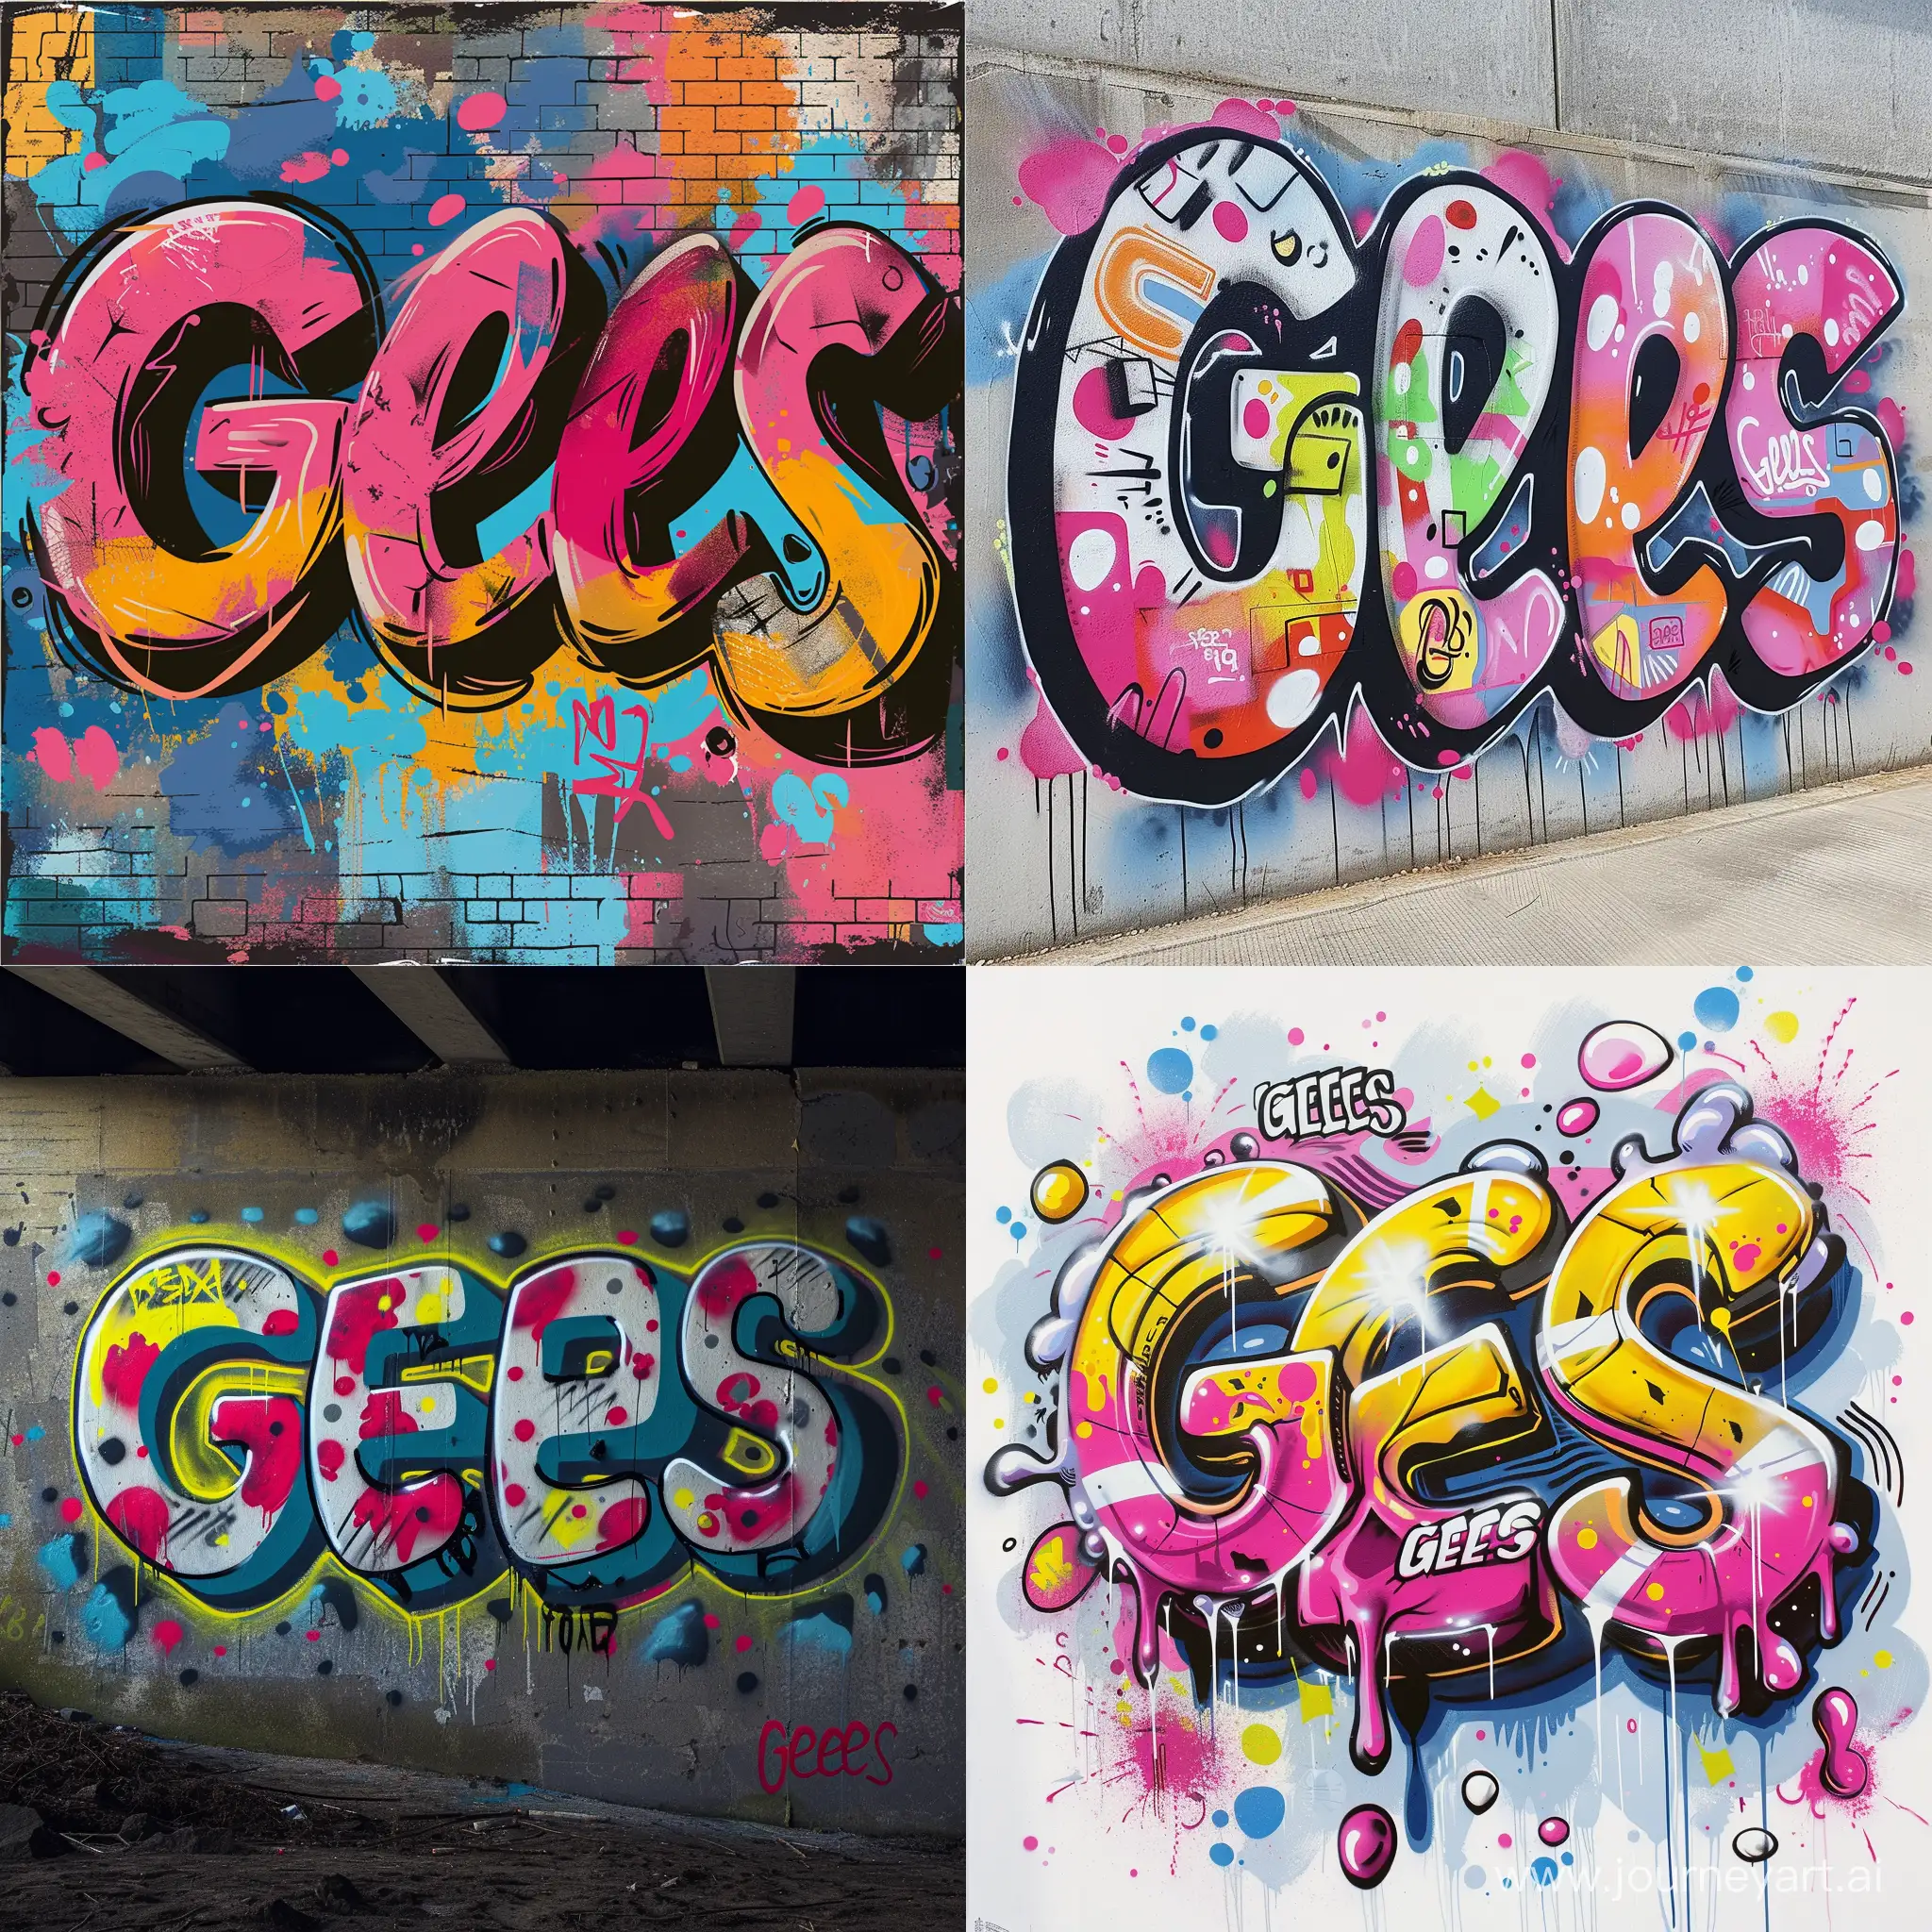 Vibrant-Graffiti-Art-Gees-in-Graffiti-Style-with-a-11-Aspect-Ratio